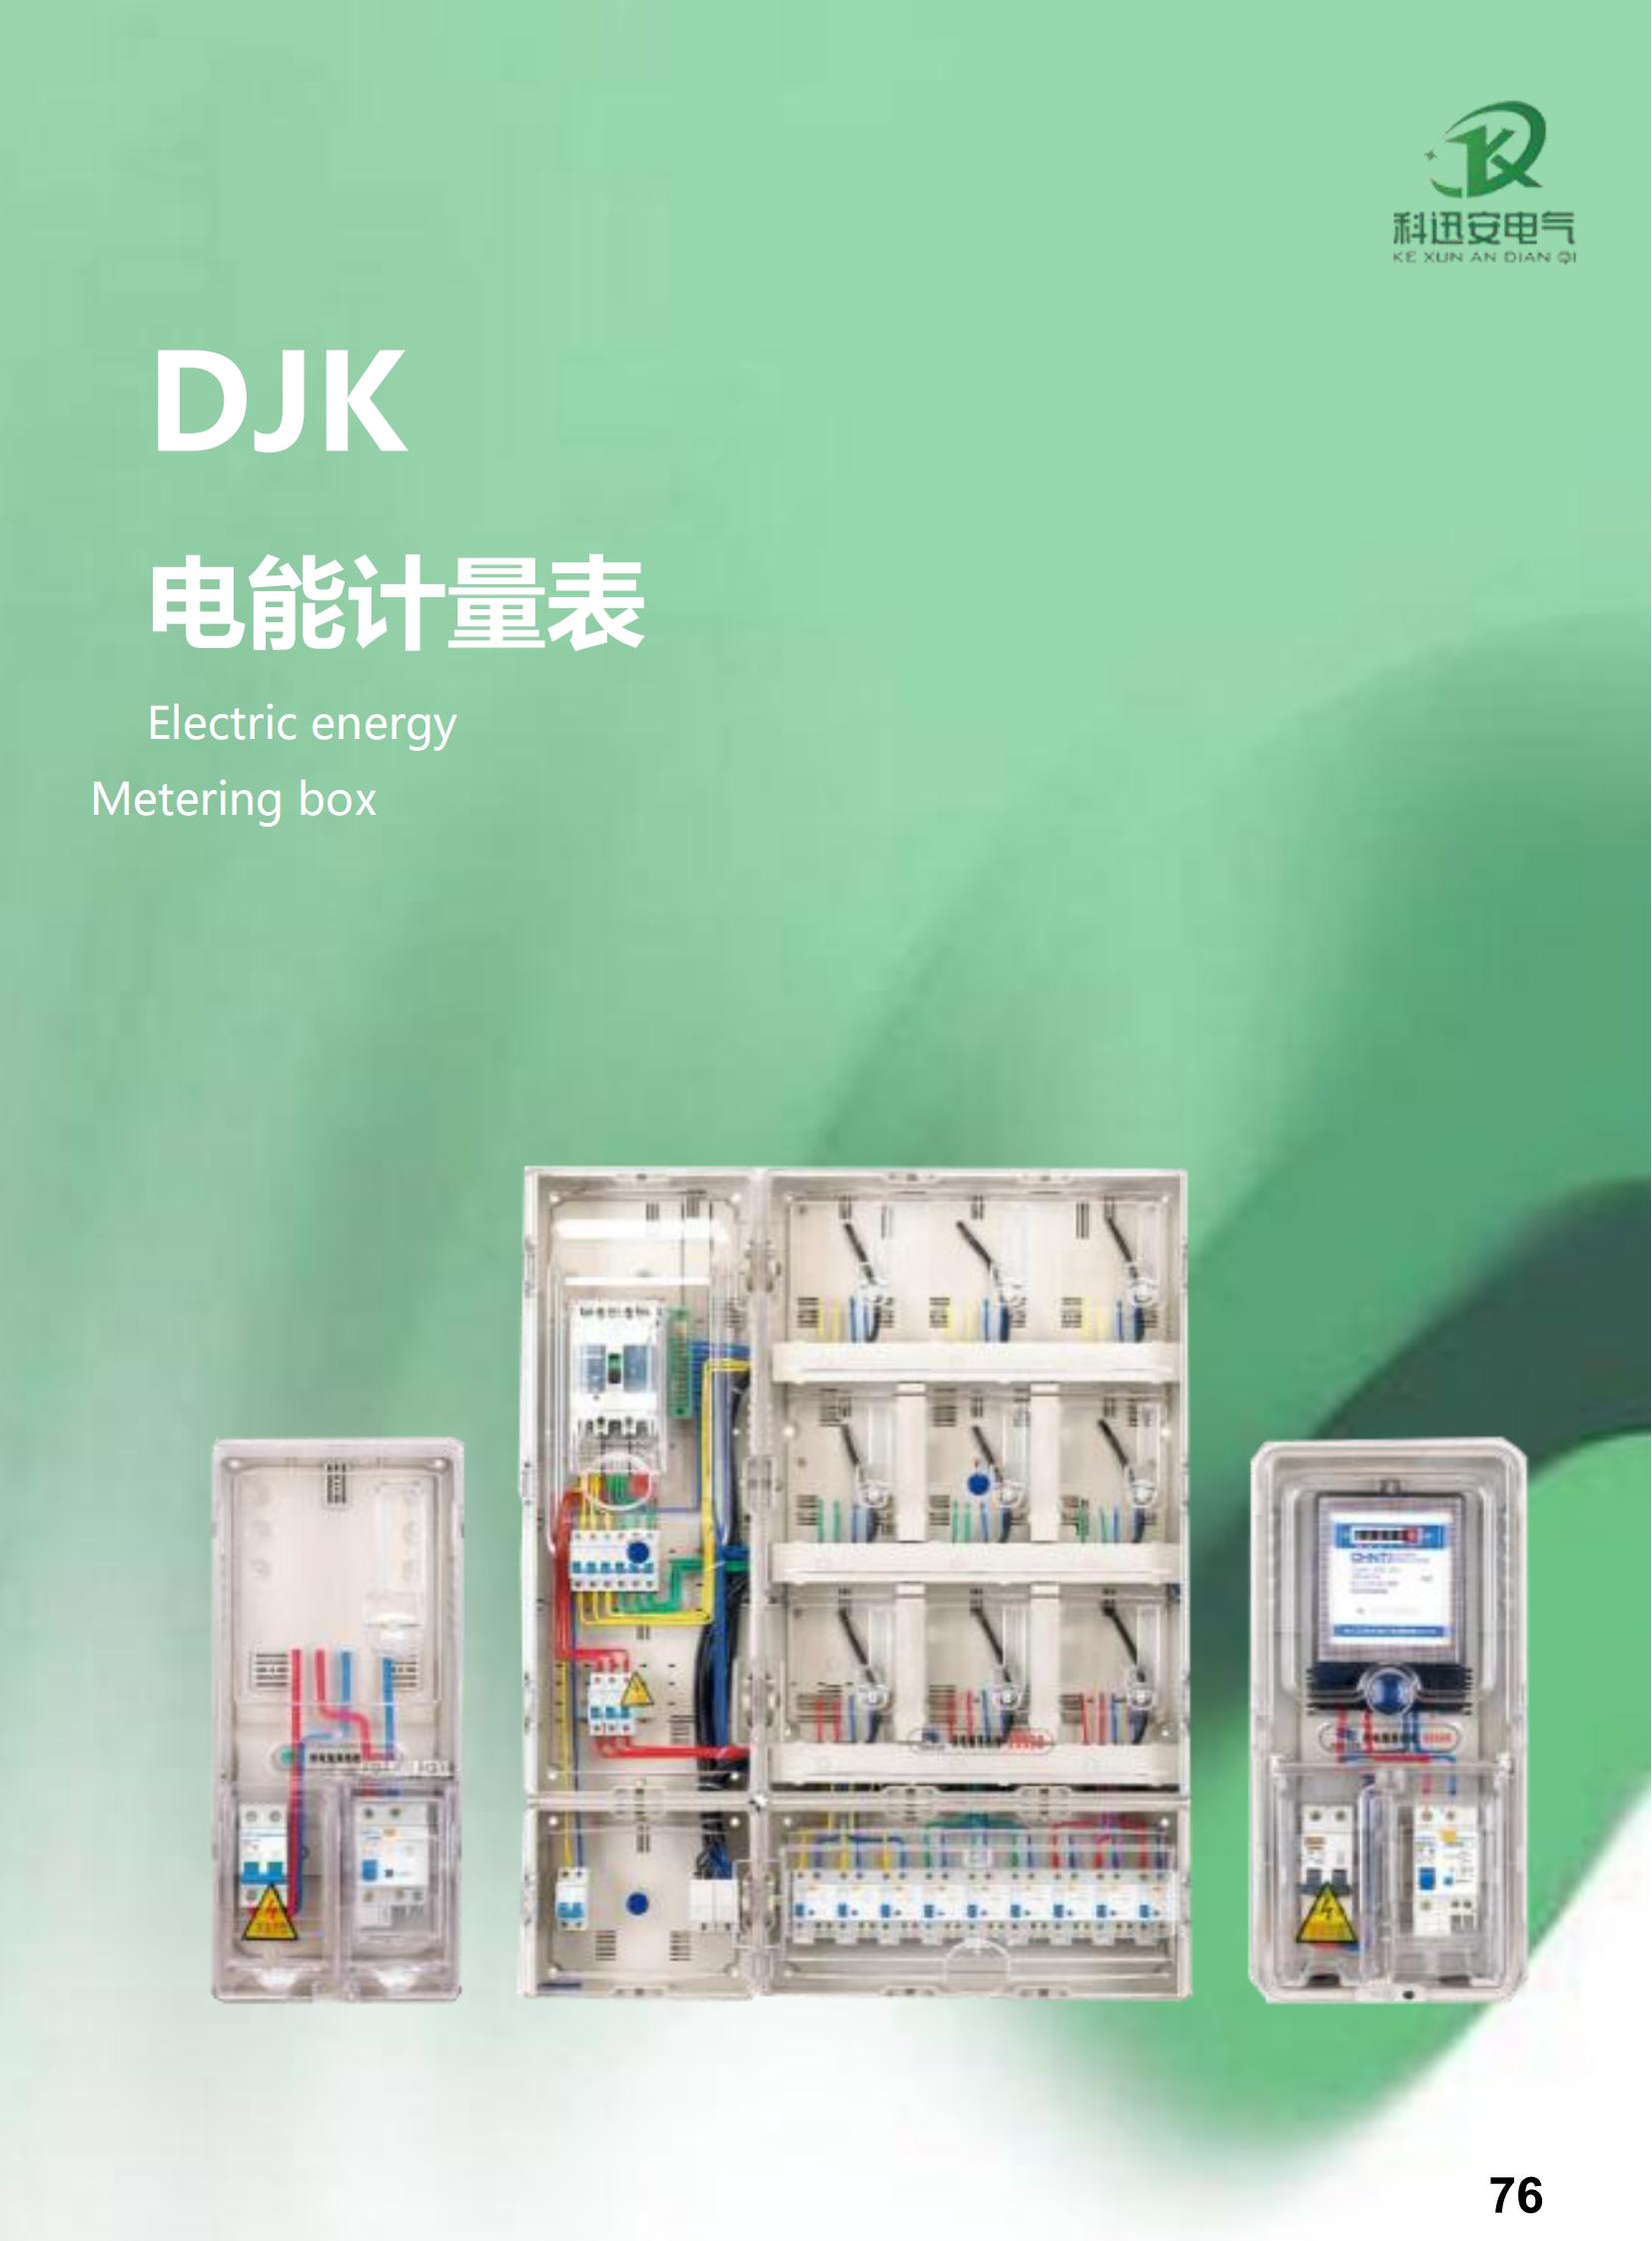 DJK electric energy metering box